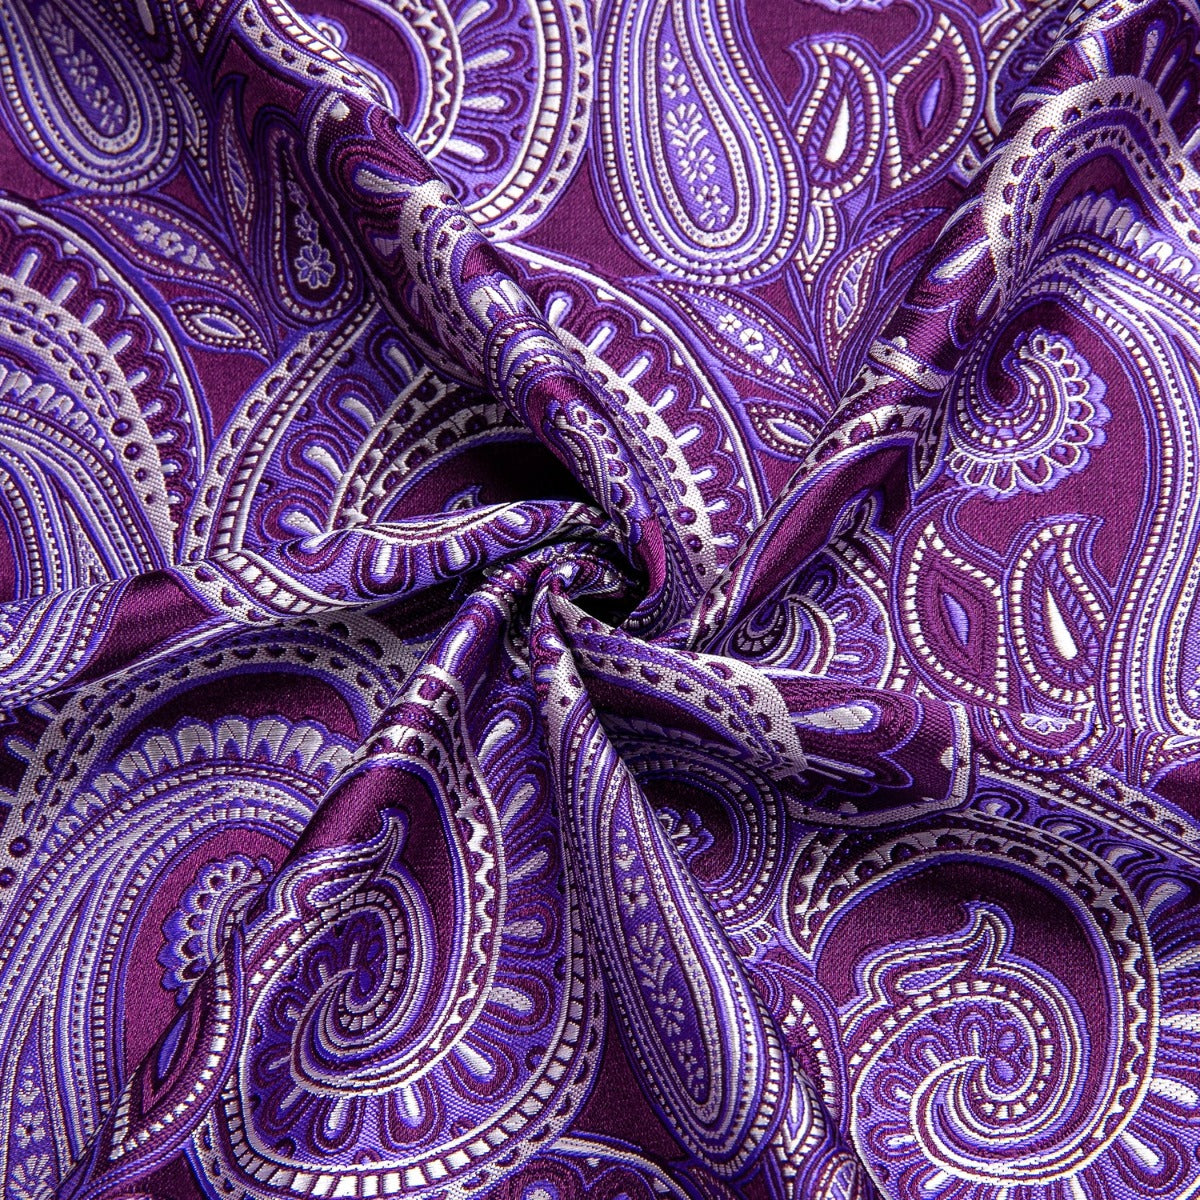 Hitie Deep Purple Paisley Silk Men's Short Sleeve Shirt